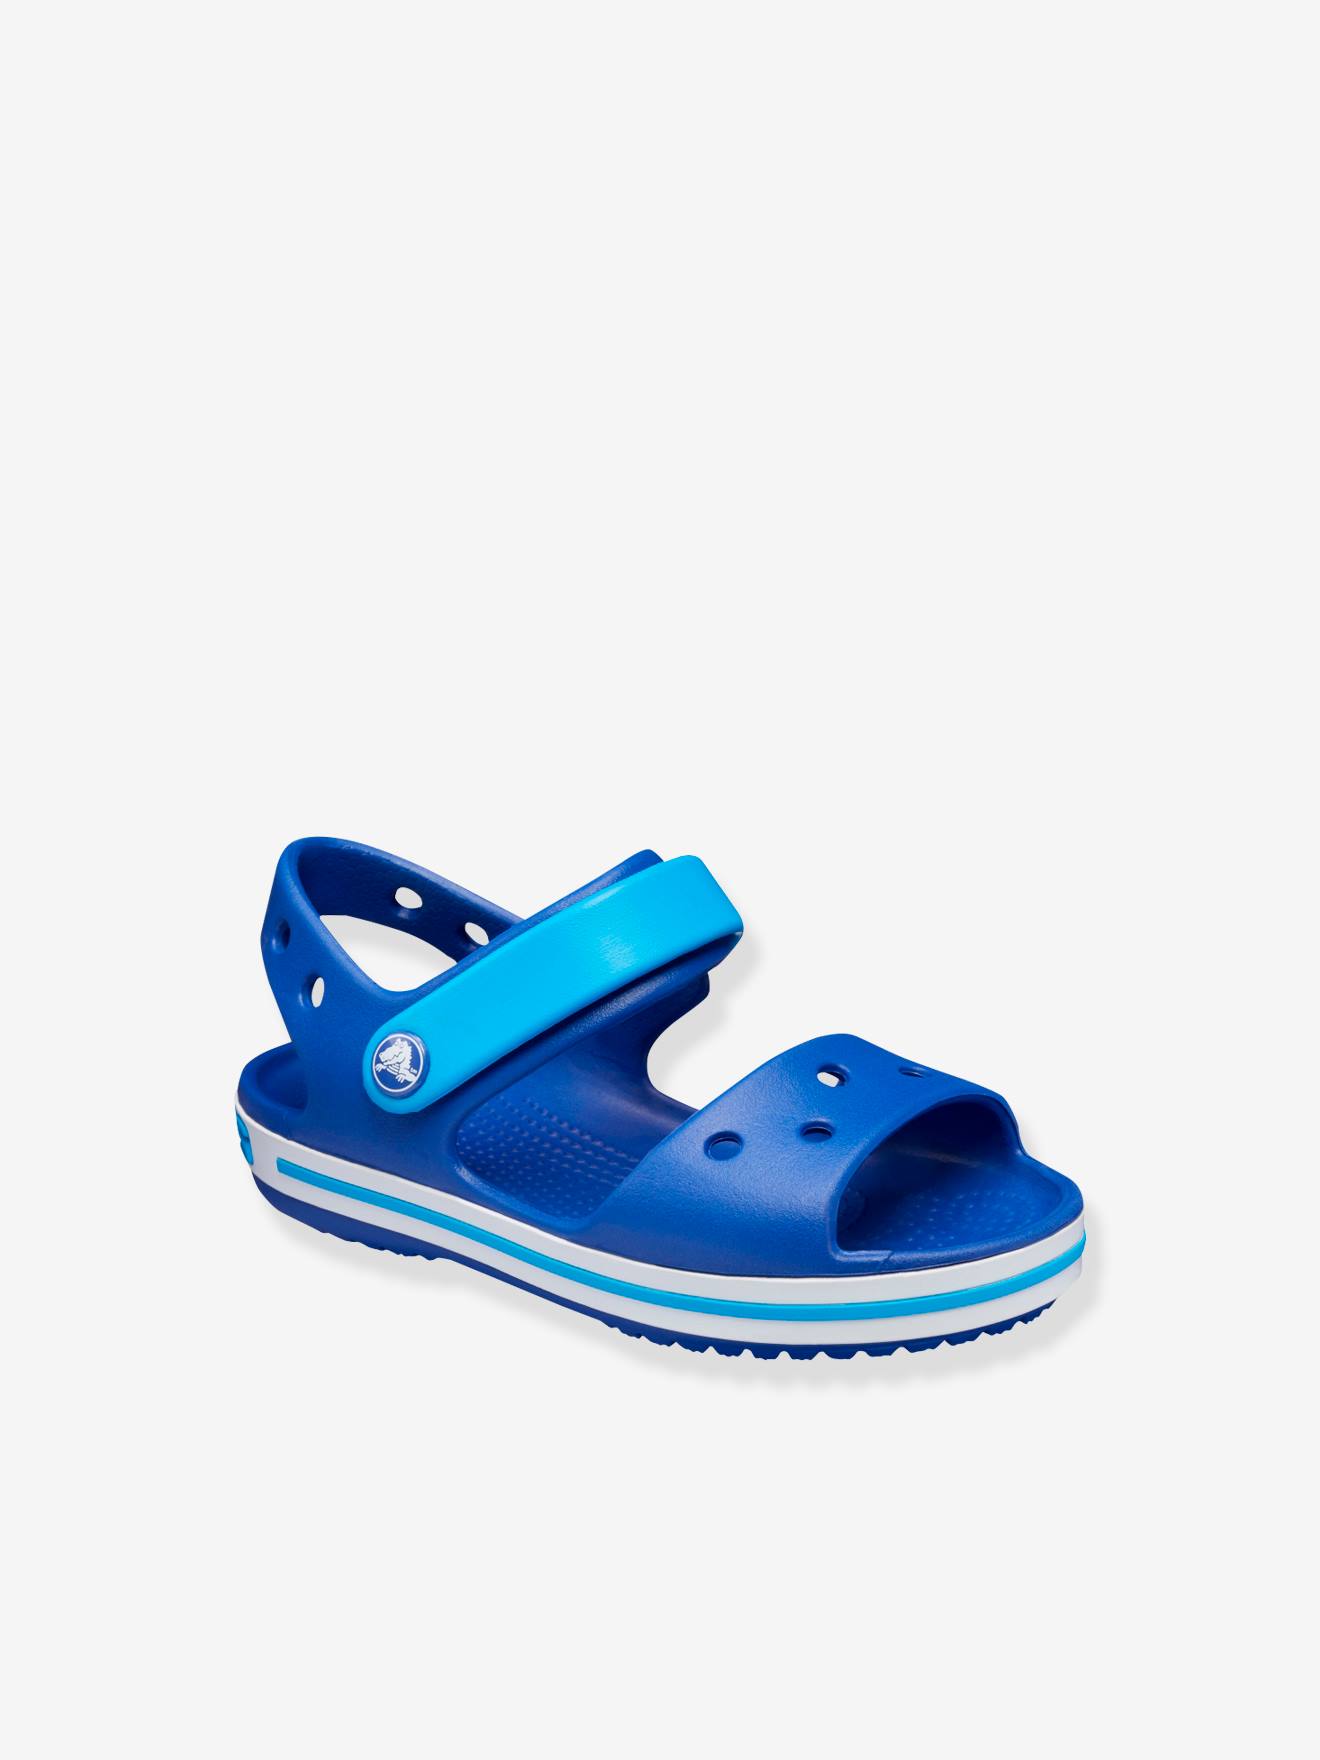 Crocband Sandal Kids by CROCS(TM) blue medium solid